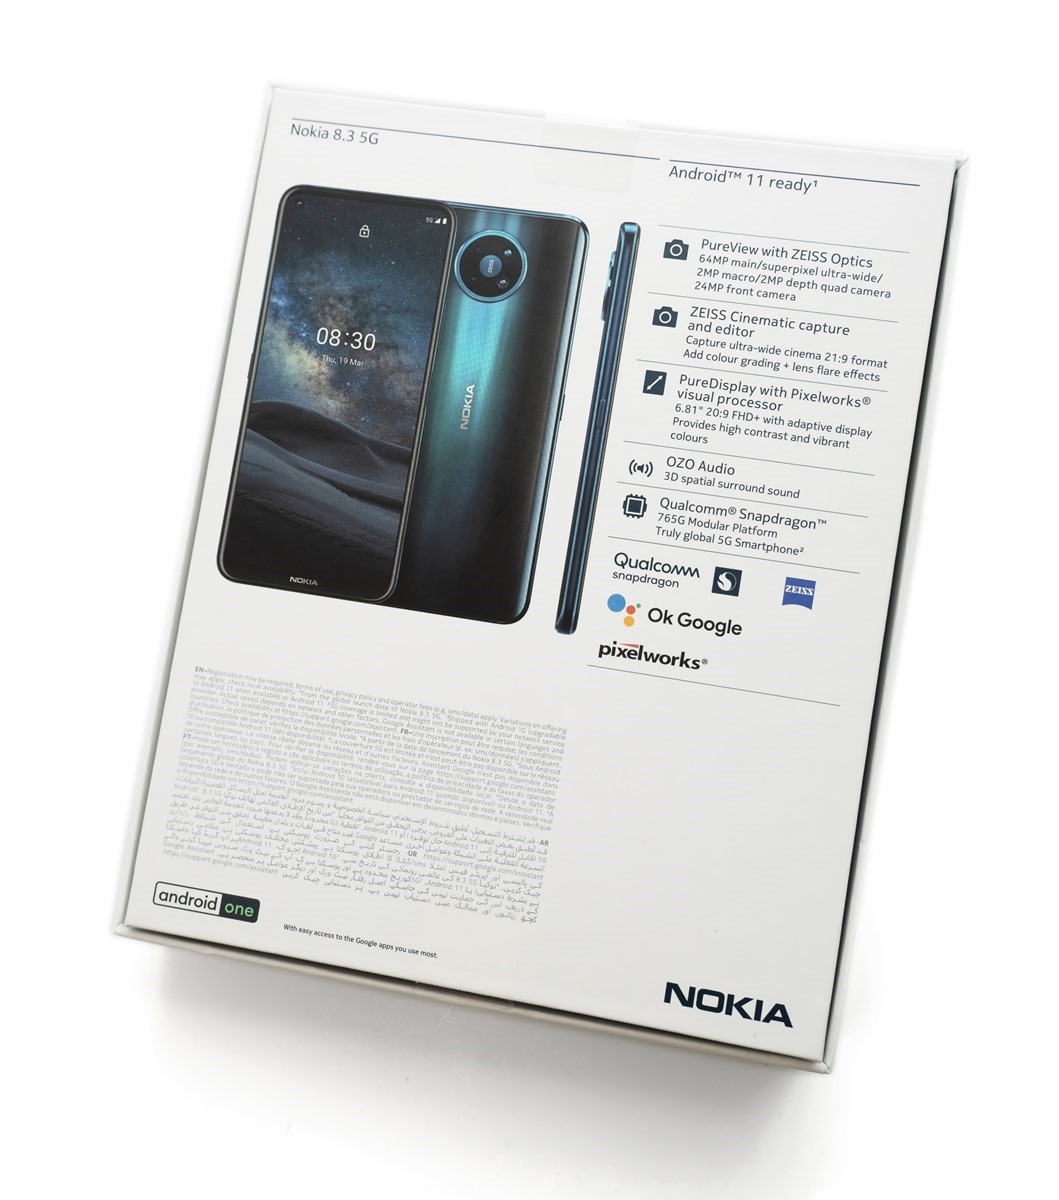 Nokia 首款 5G 手機來了！Nokia 8.3 支援 5G 最多頻段全球最好用、大螢幕四鏡頭原生 Android 體驗 @3C 達人廖阿輝